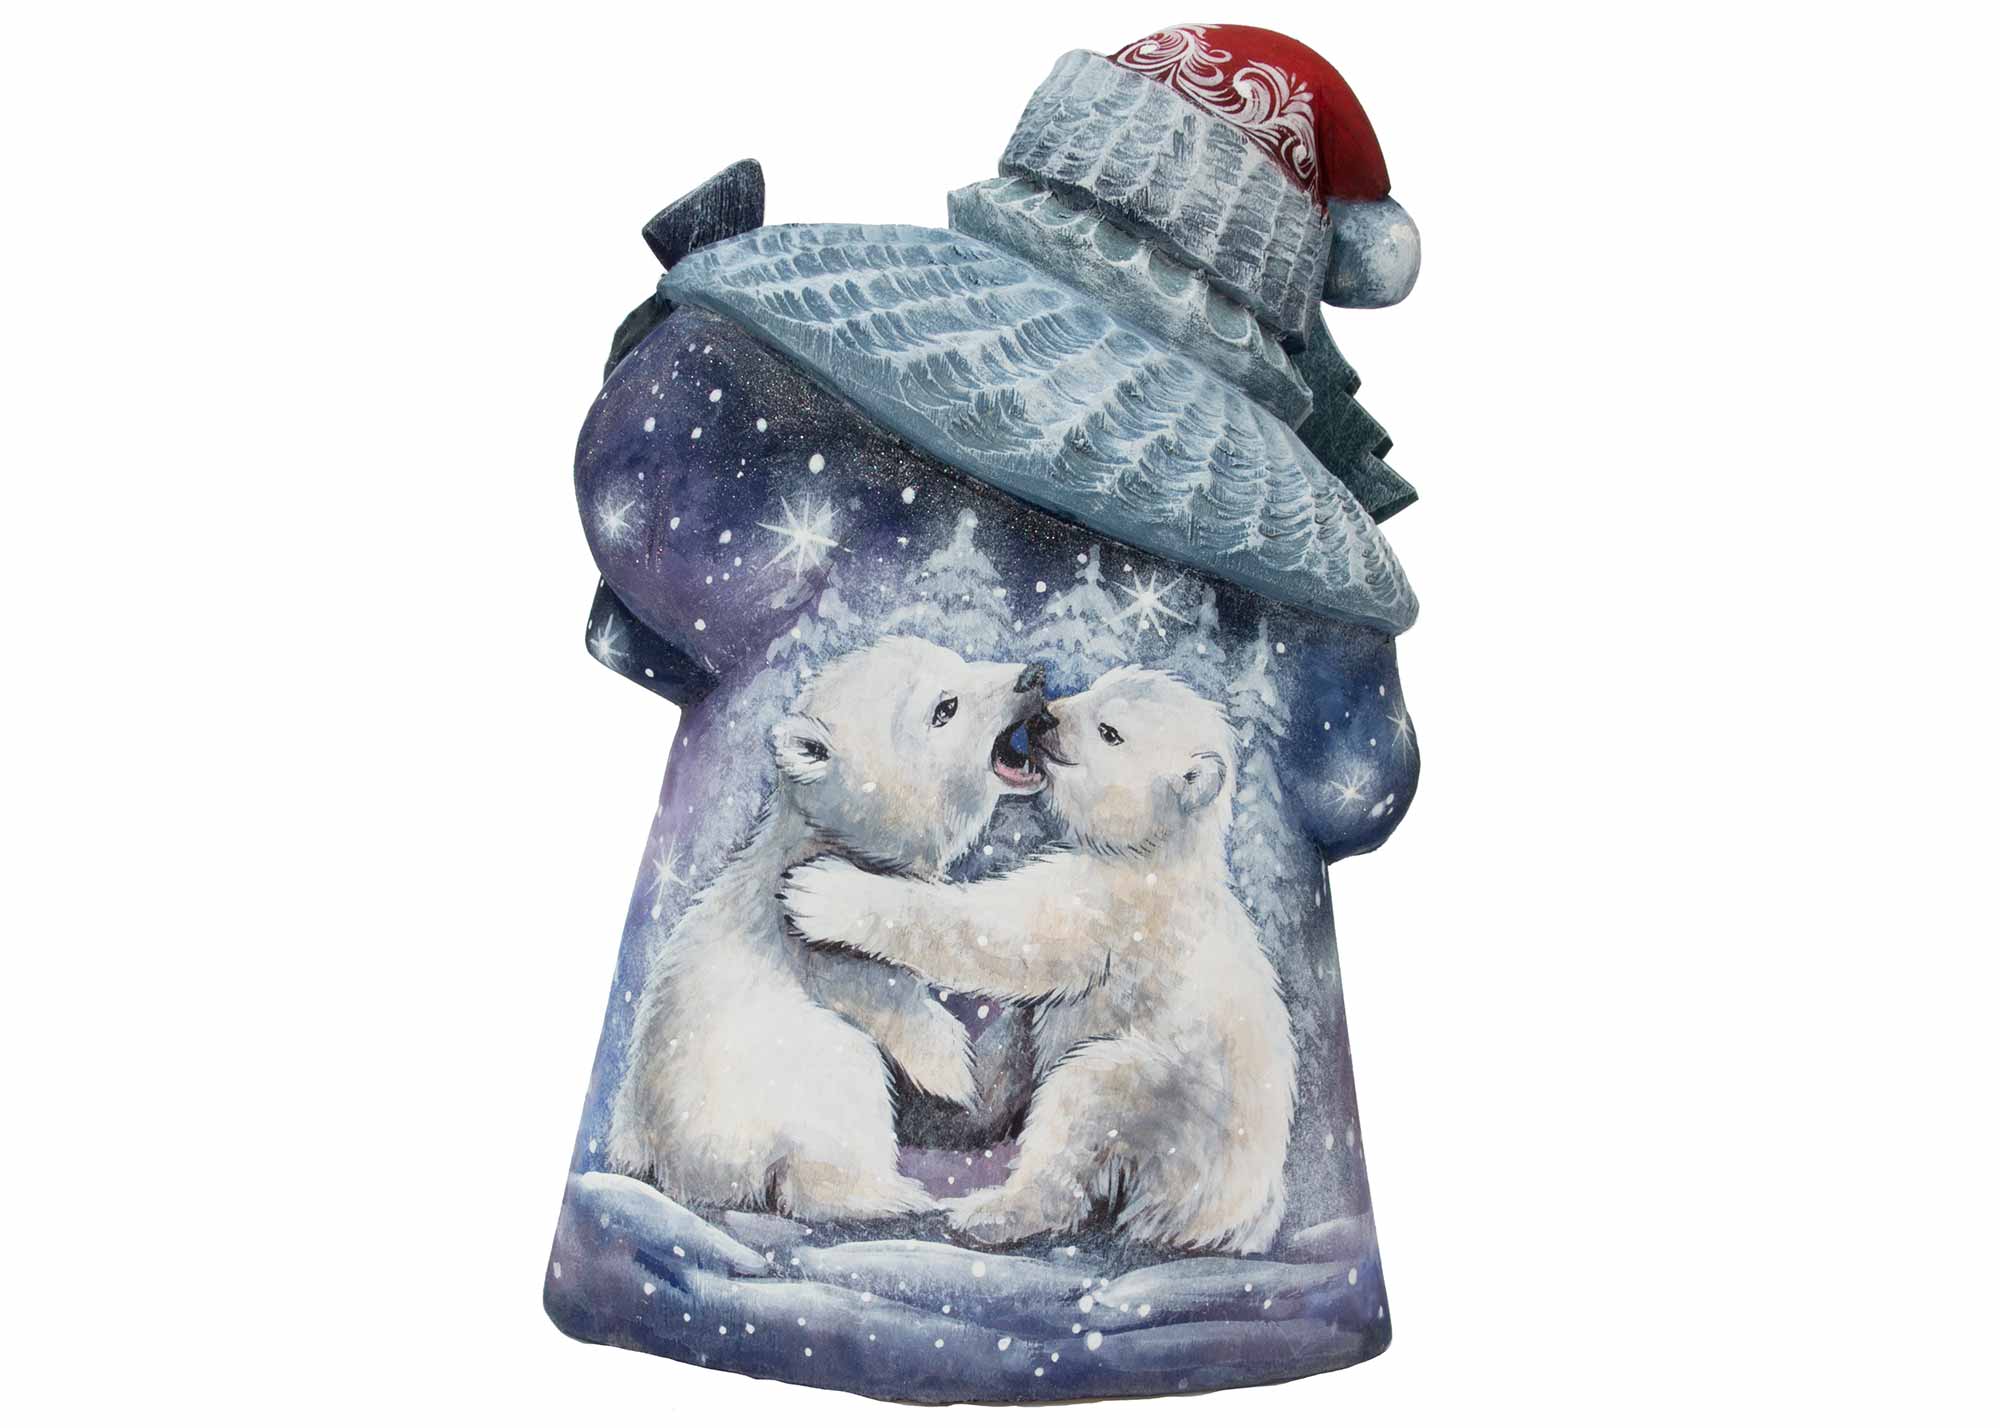 Buy Father Frost Carving w/ Polar Bear Cubs 7" at GoldenCockerel.com